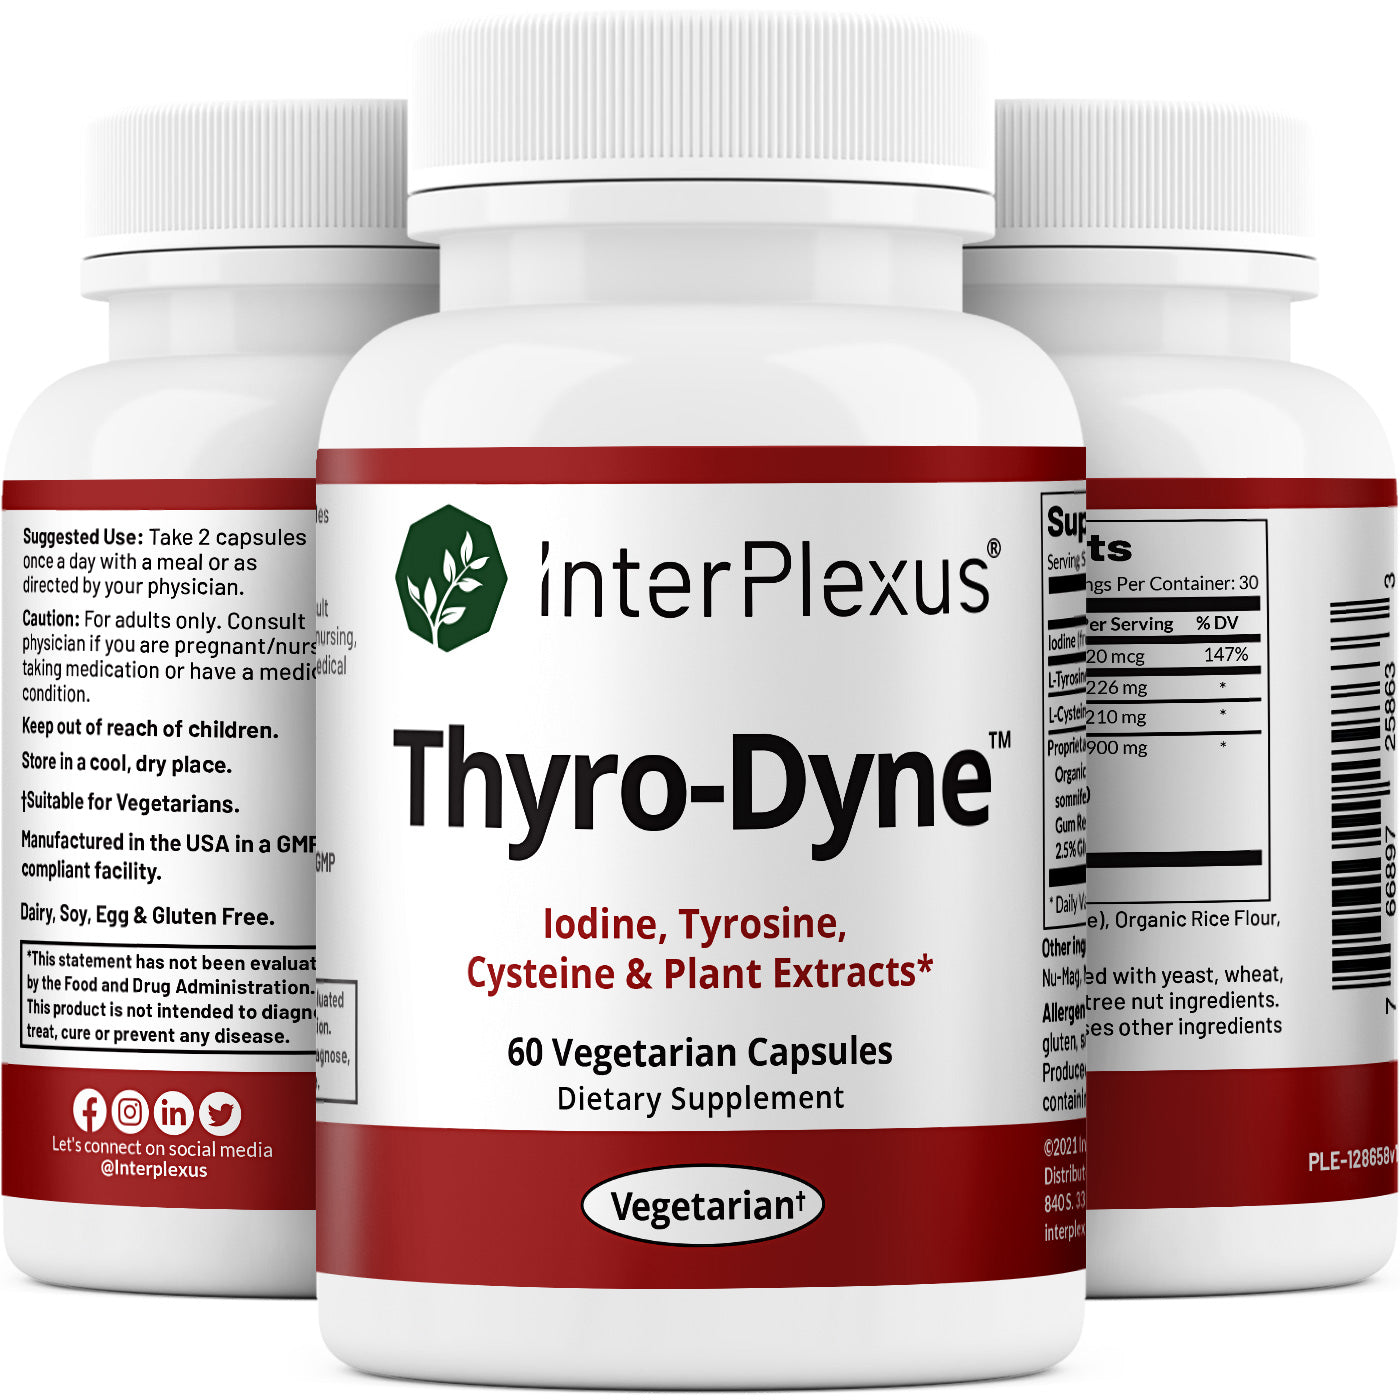 Thyro-Dyne Combination